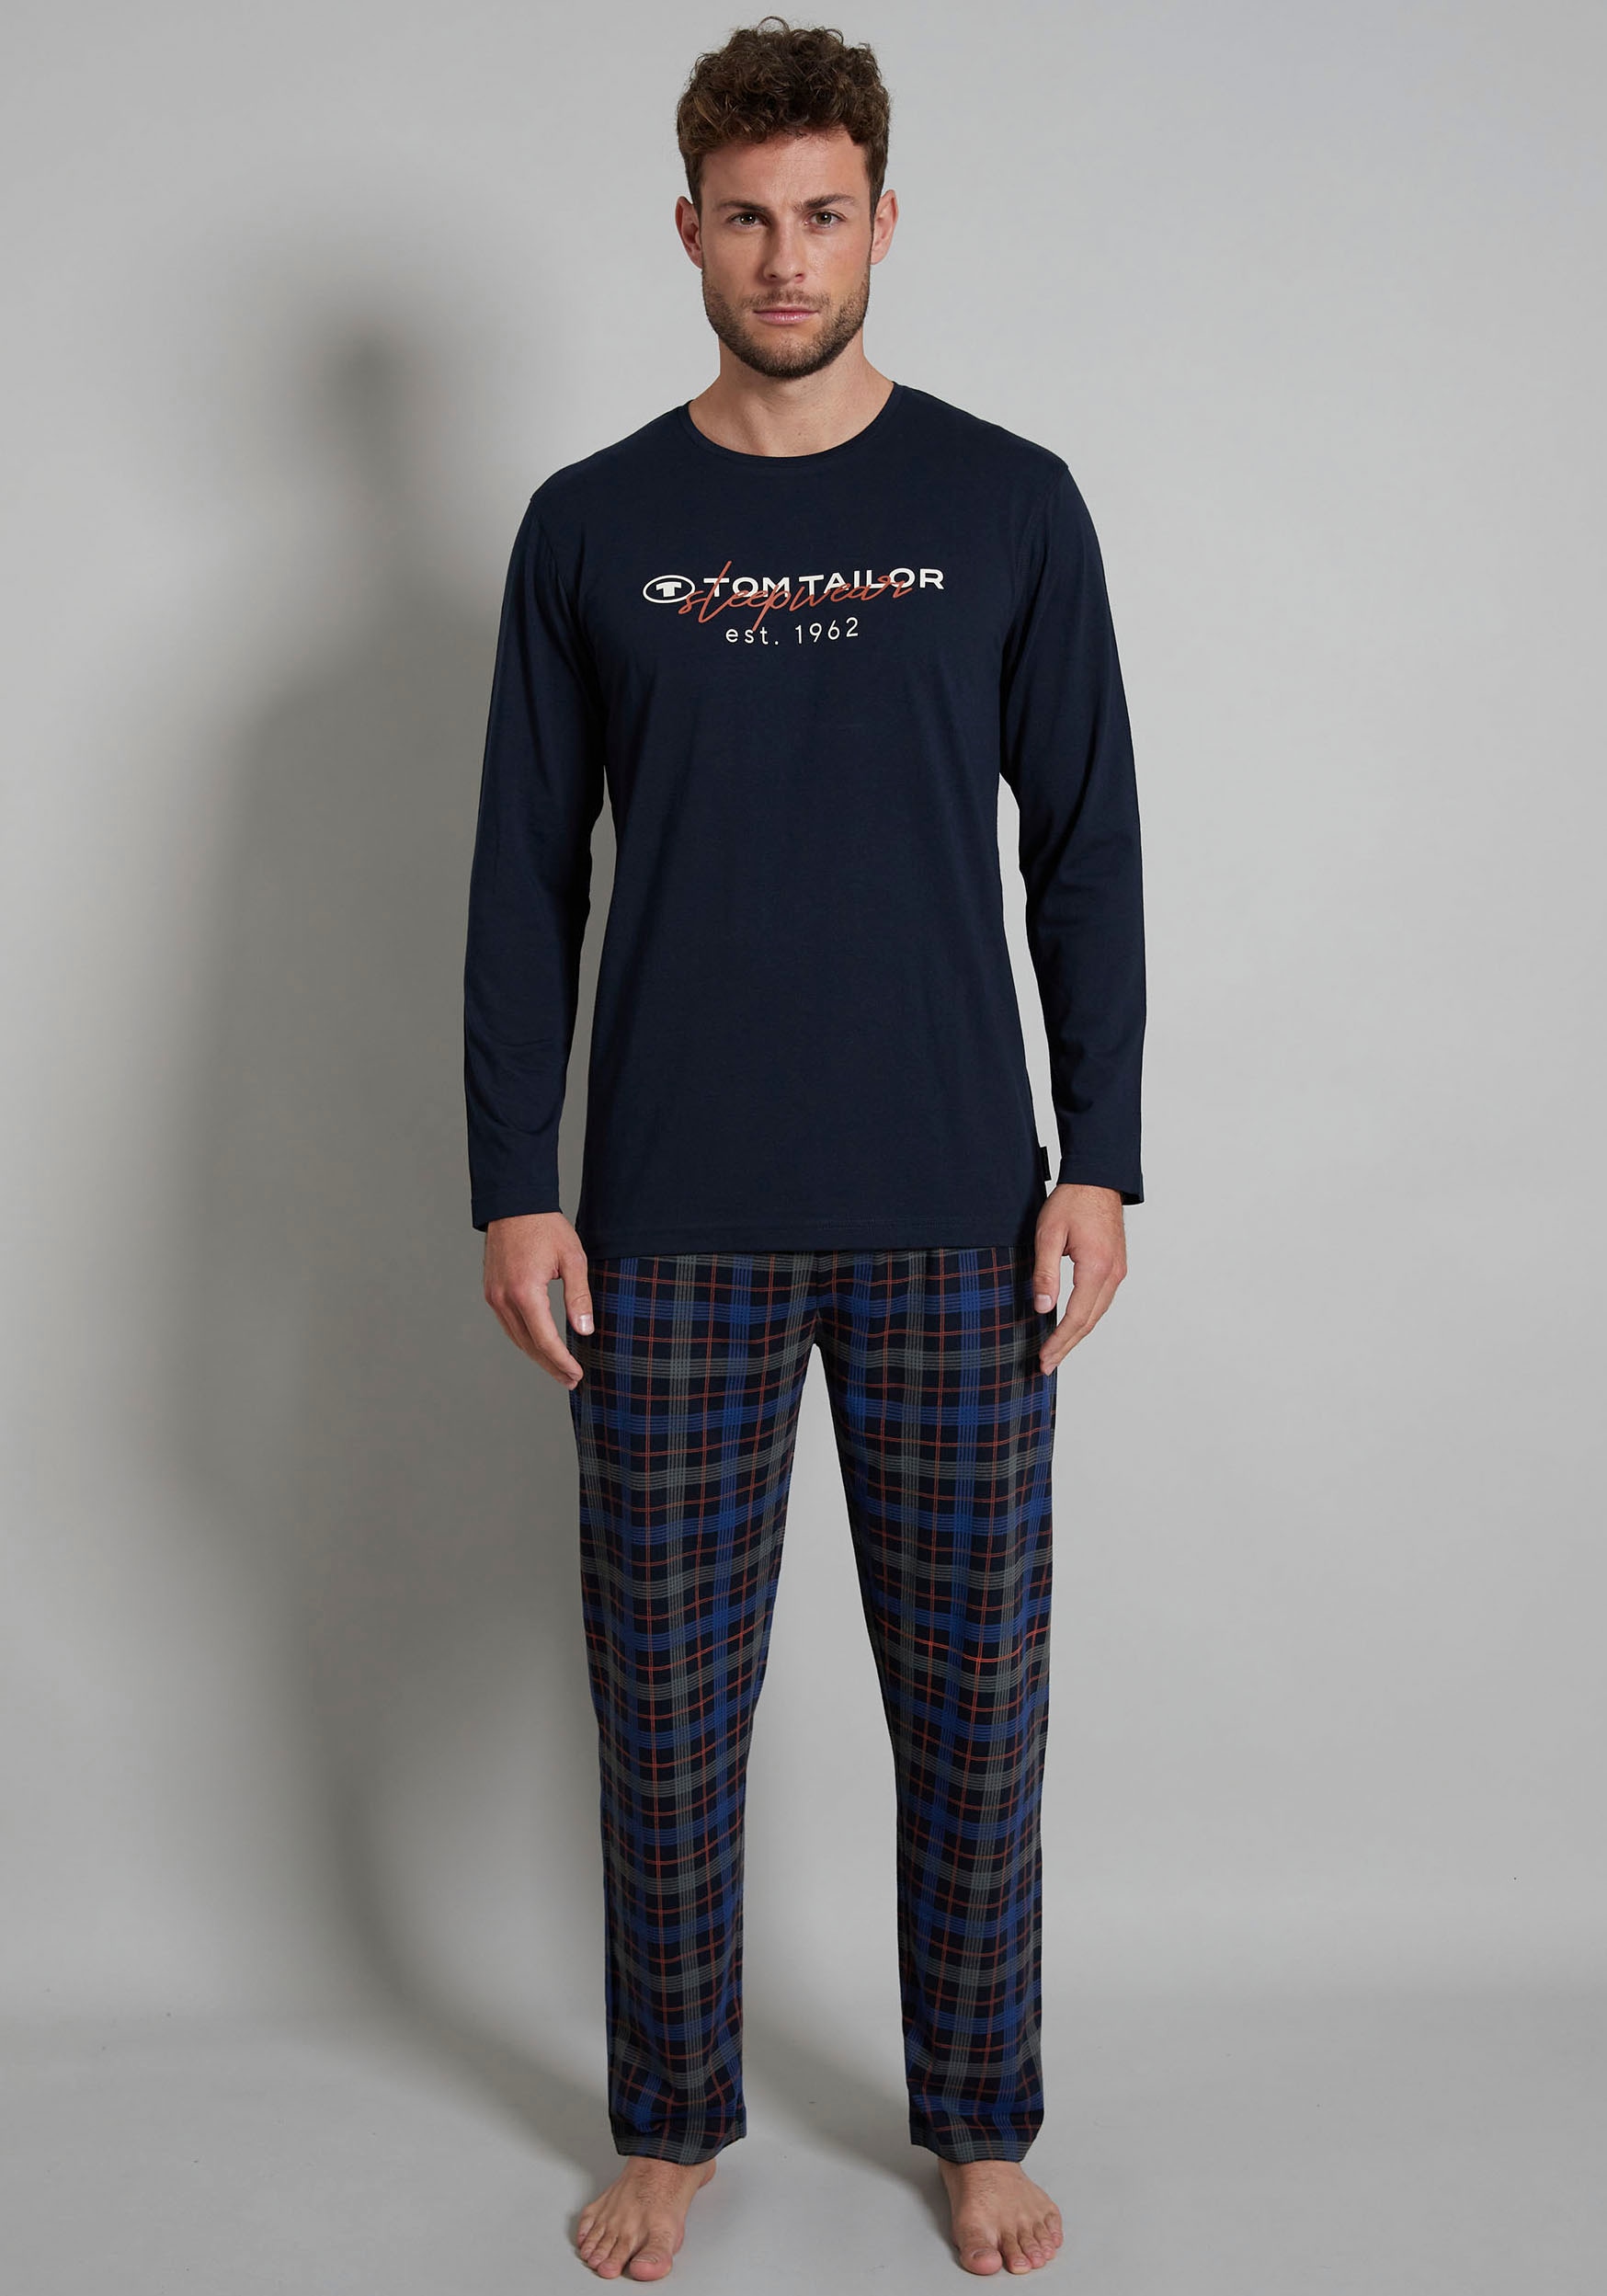 OTTO TOM bei Pyjama shoppen online TAILOR